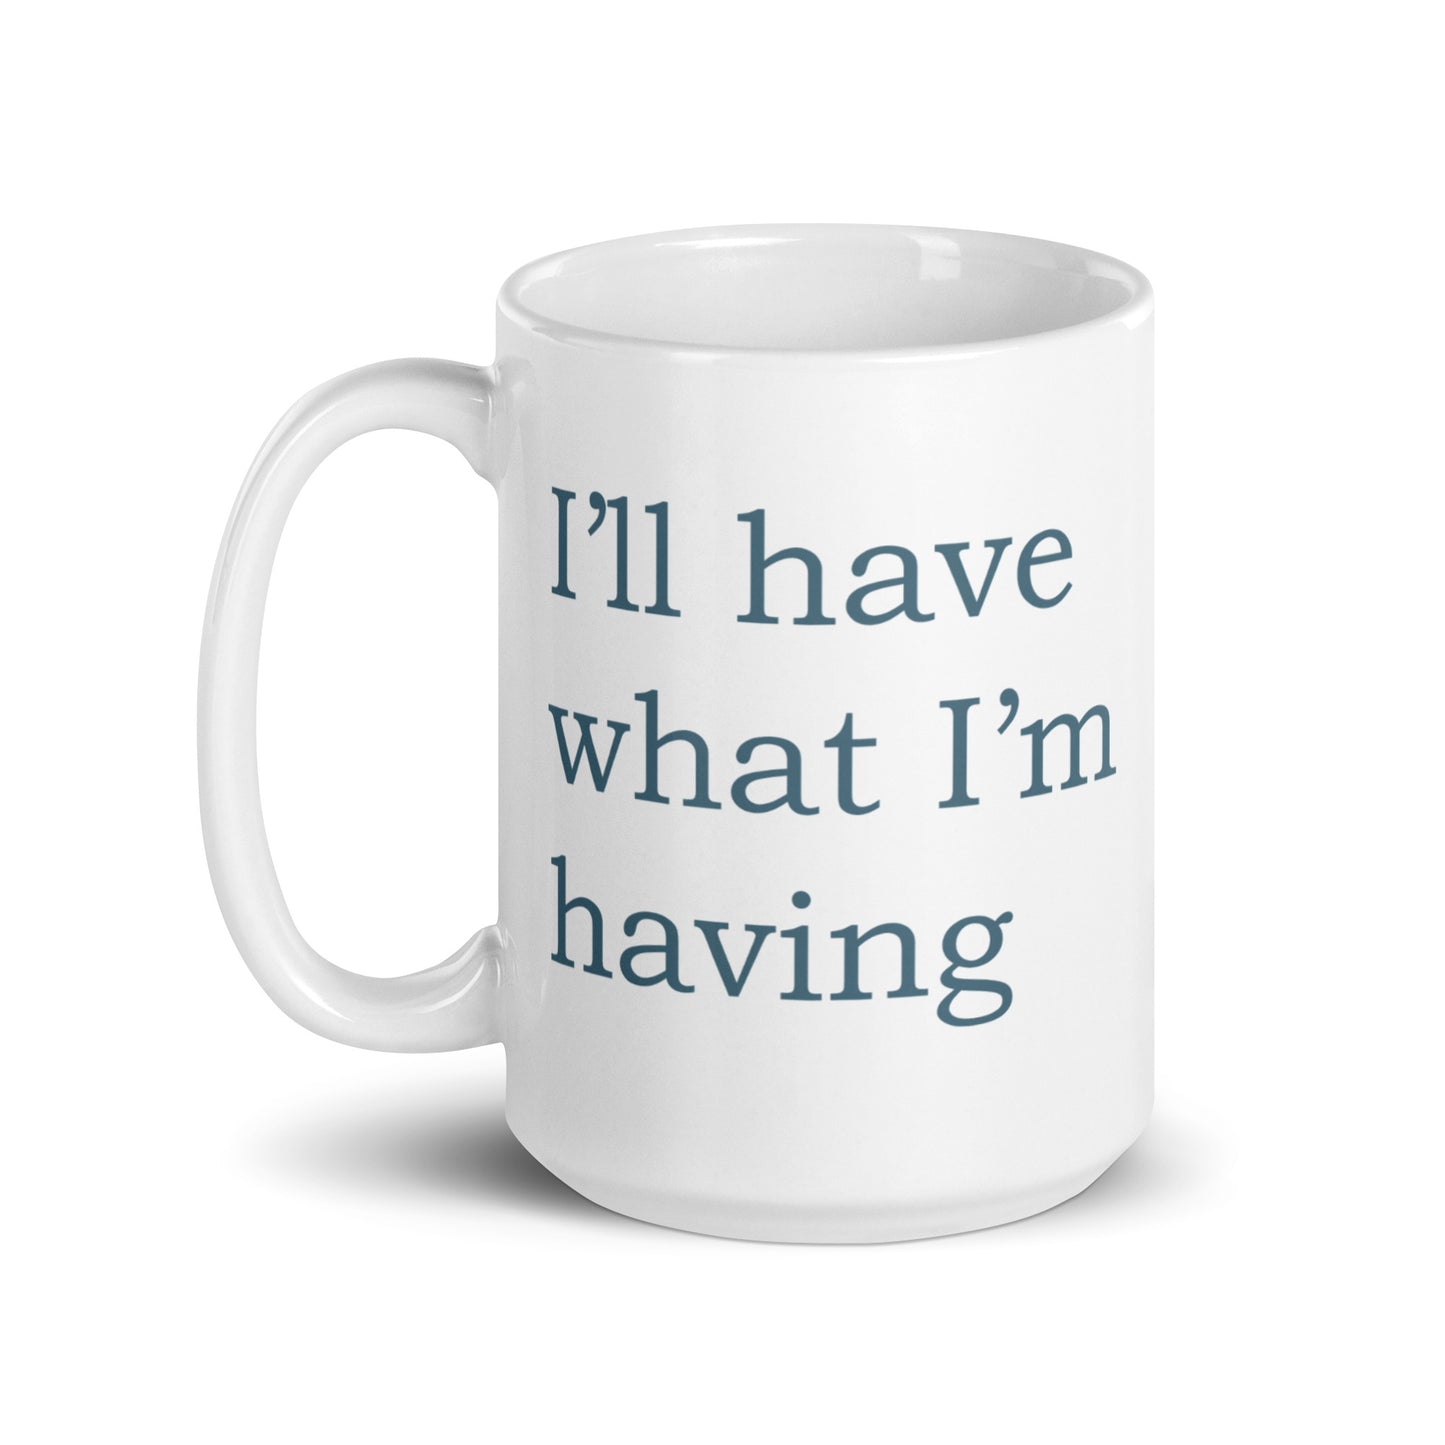 Funny Mug, Coffee Gift, I'll have what I'm Having